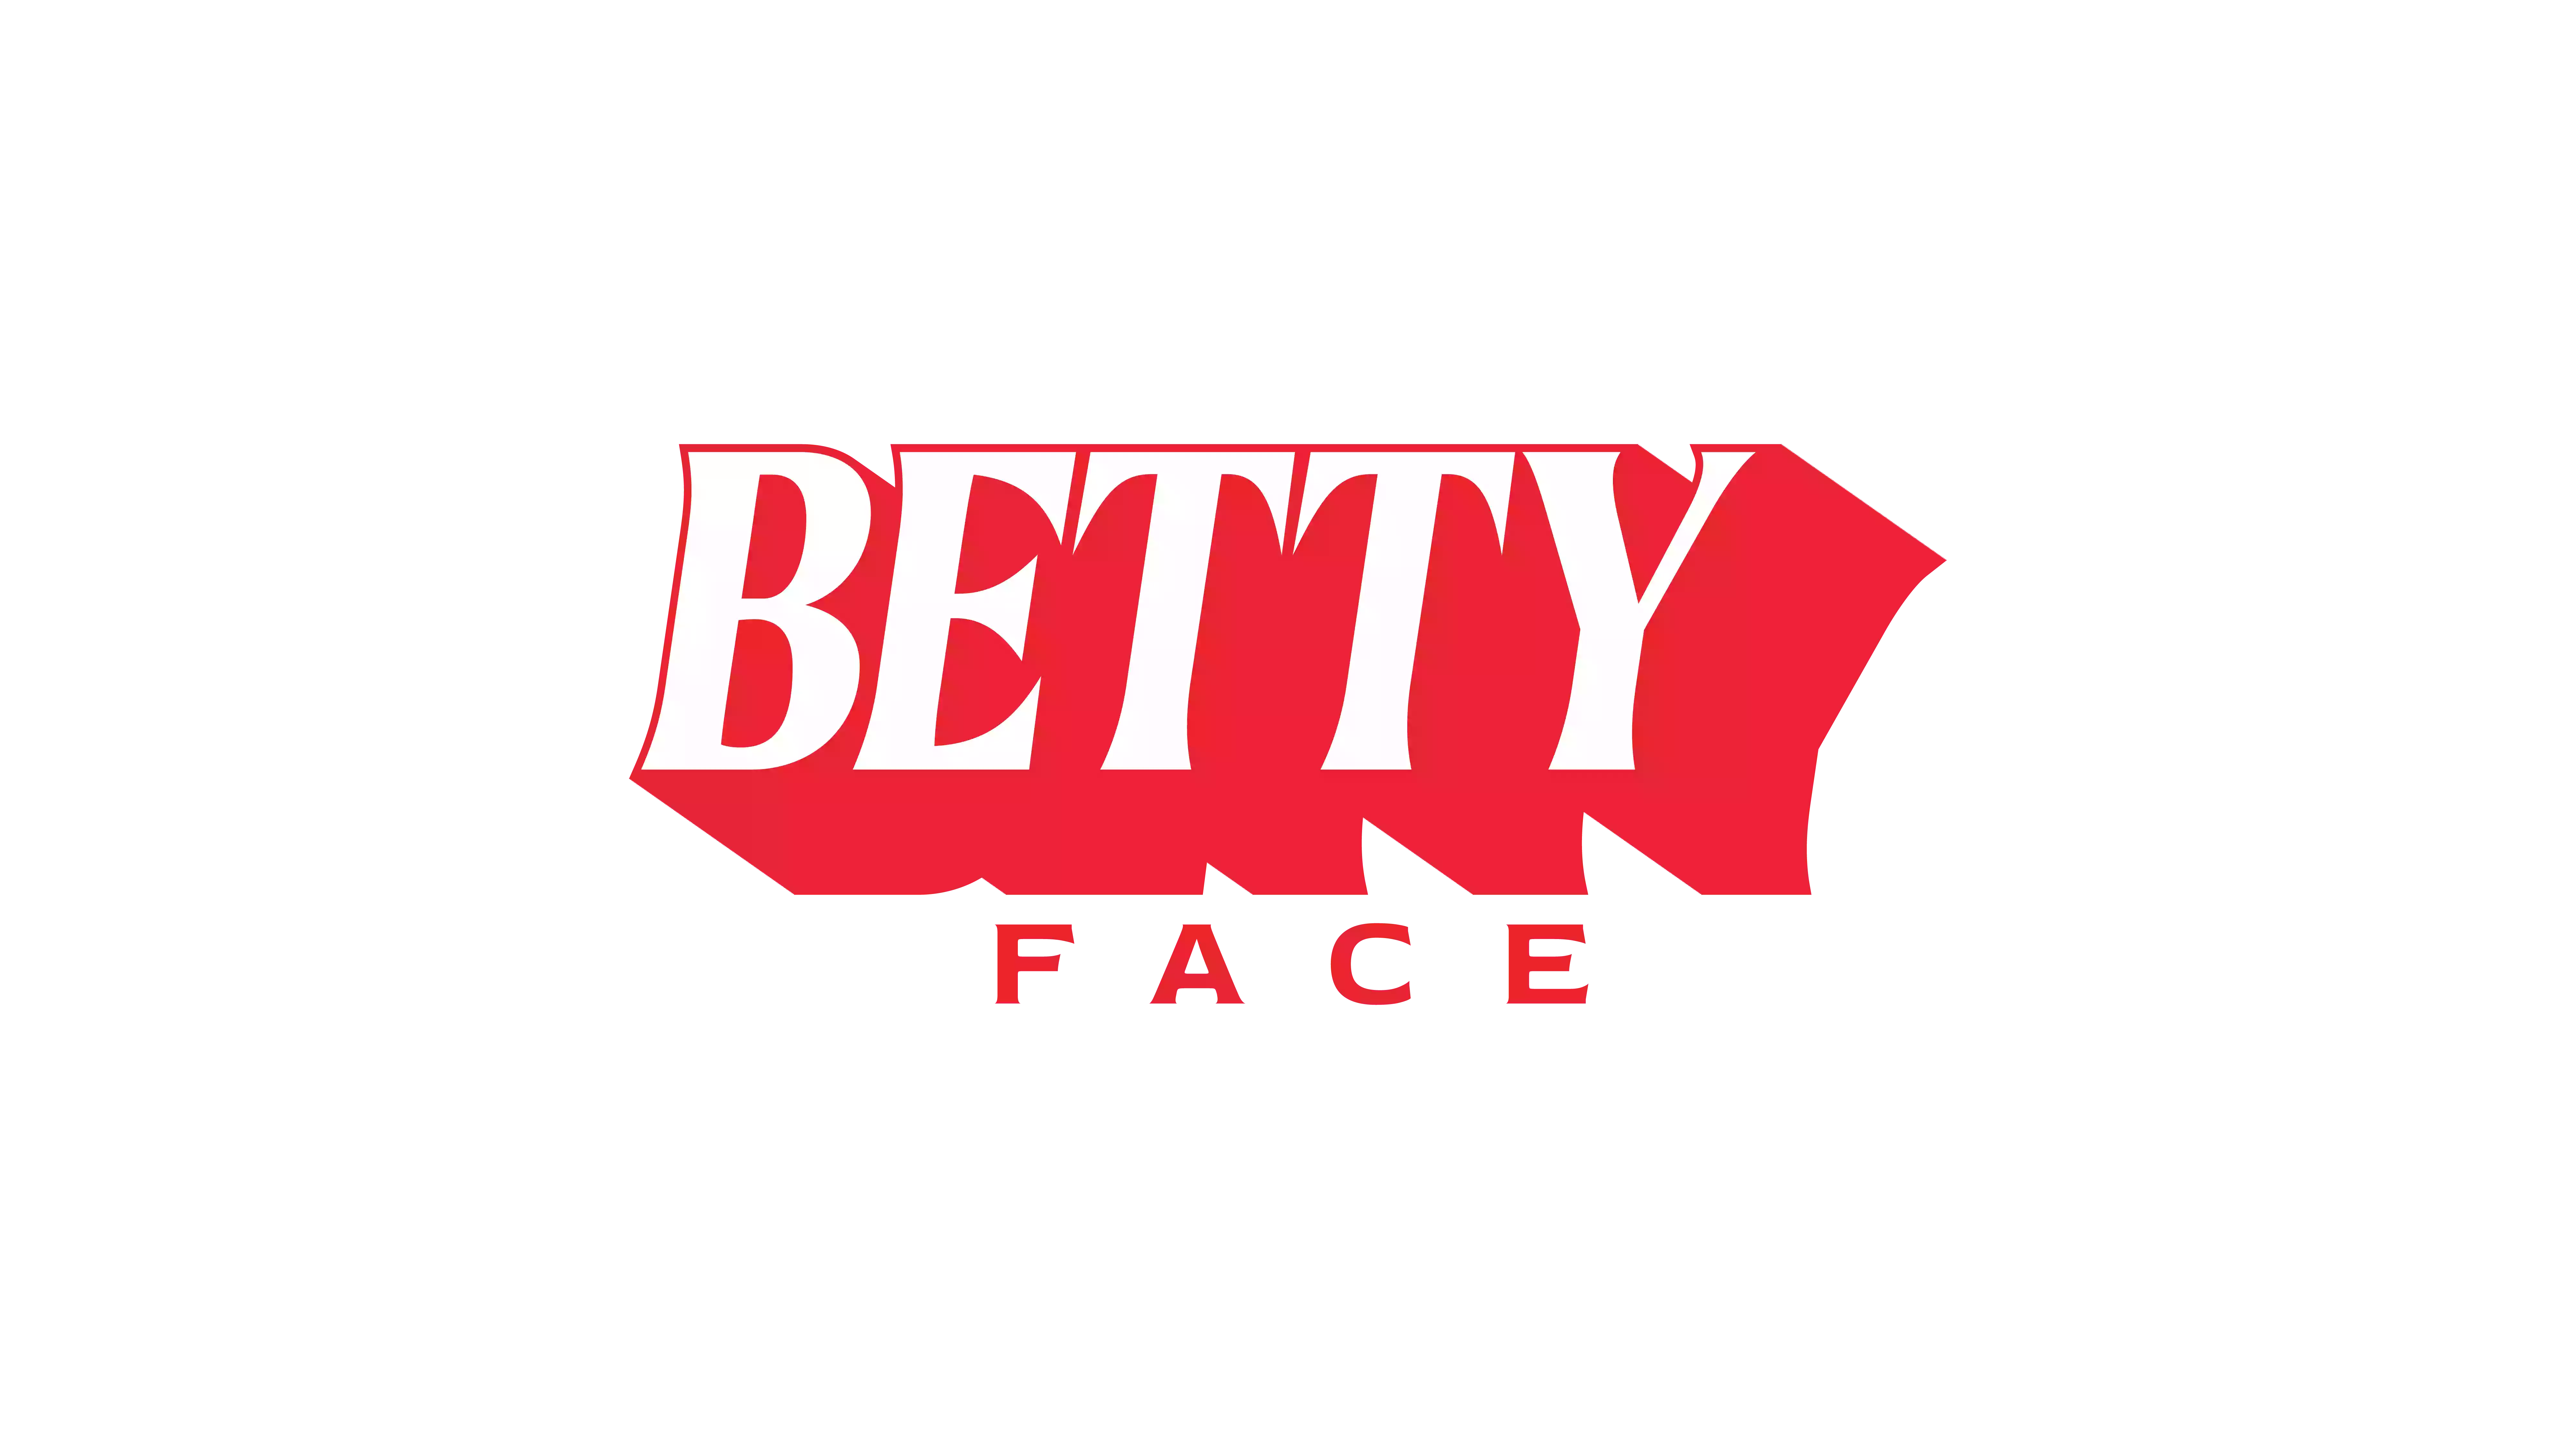 Betty Face